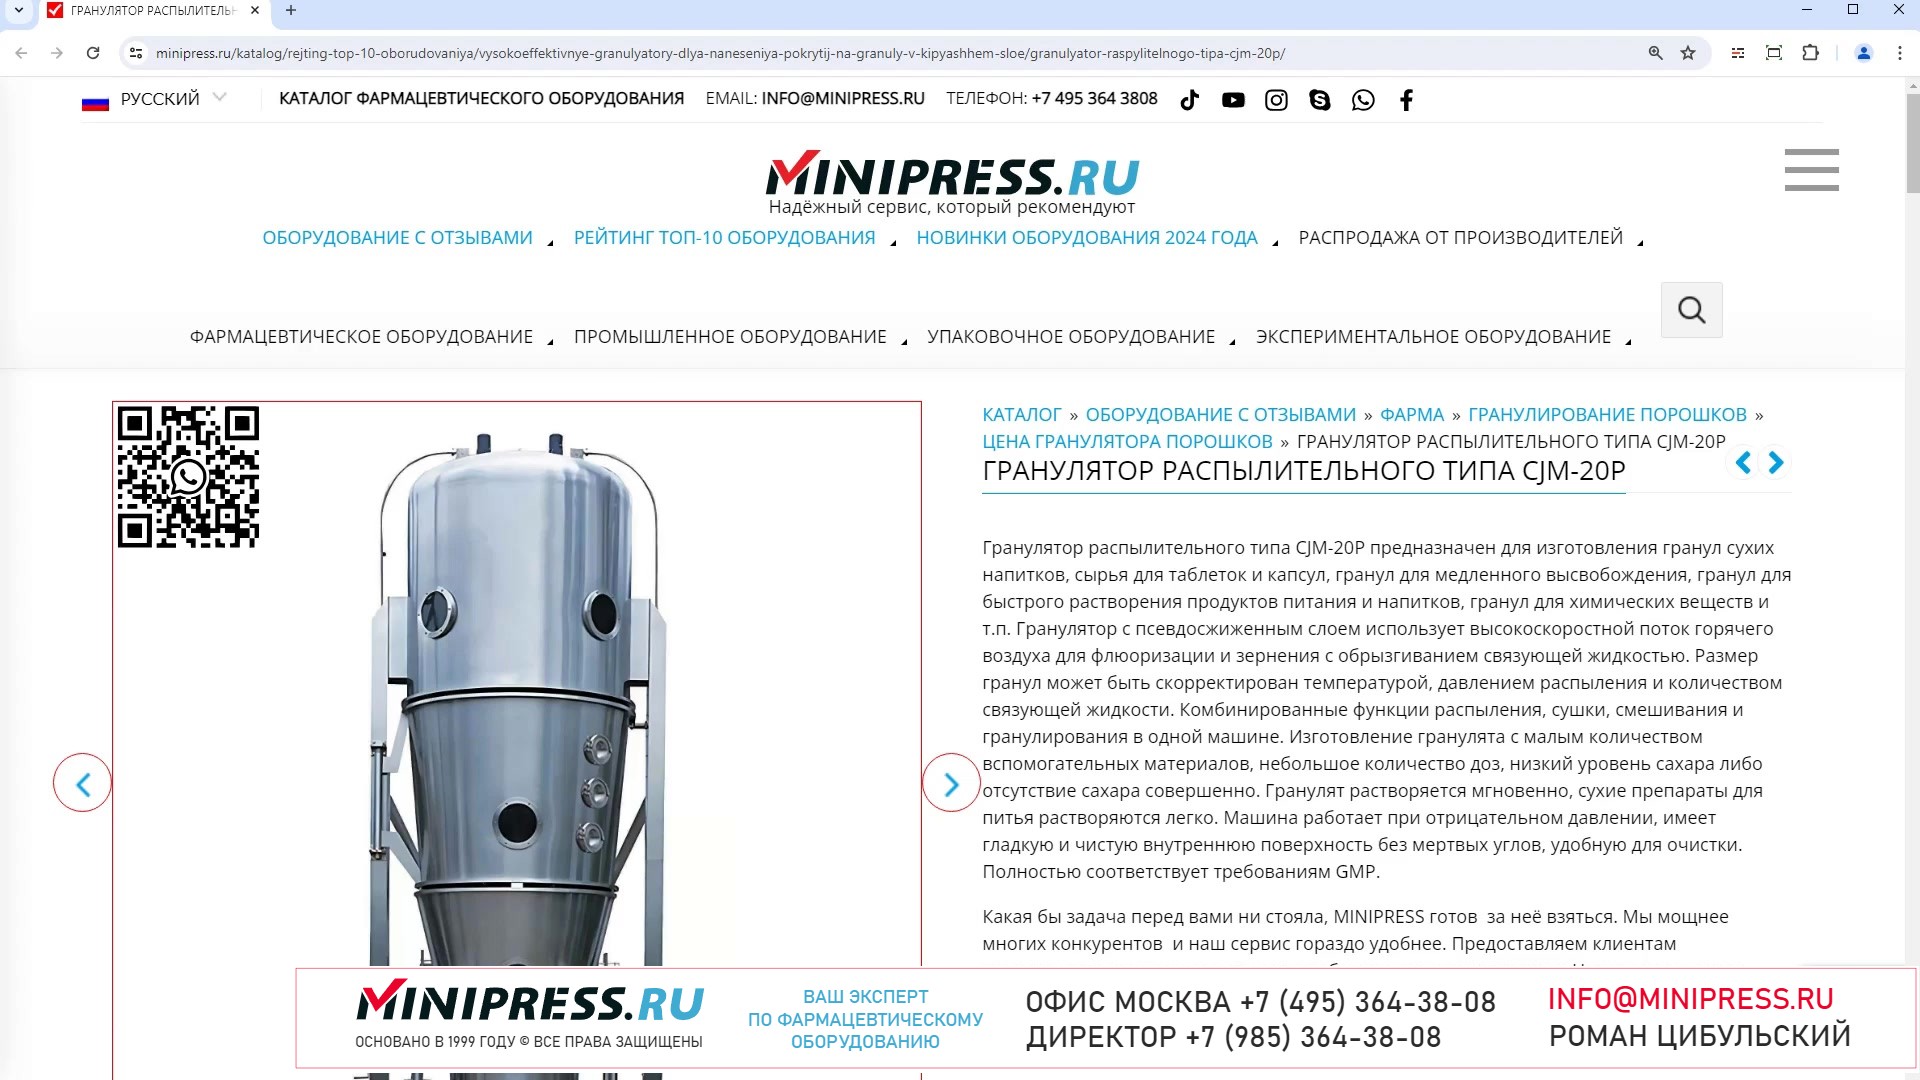 Minipress.ru Гранулятор распылительного типа CJM-20P